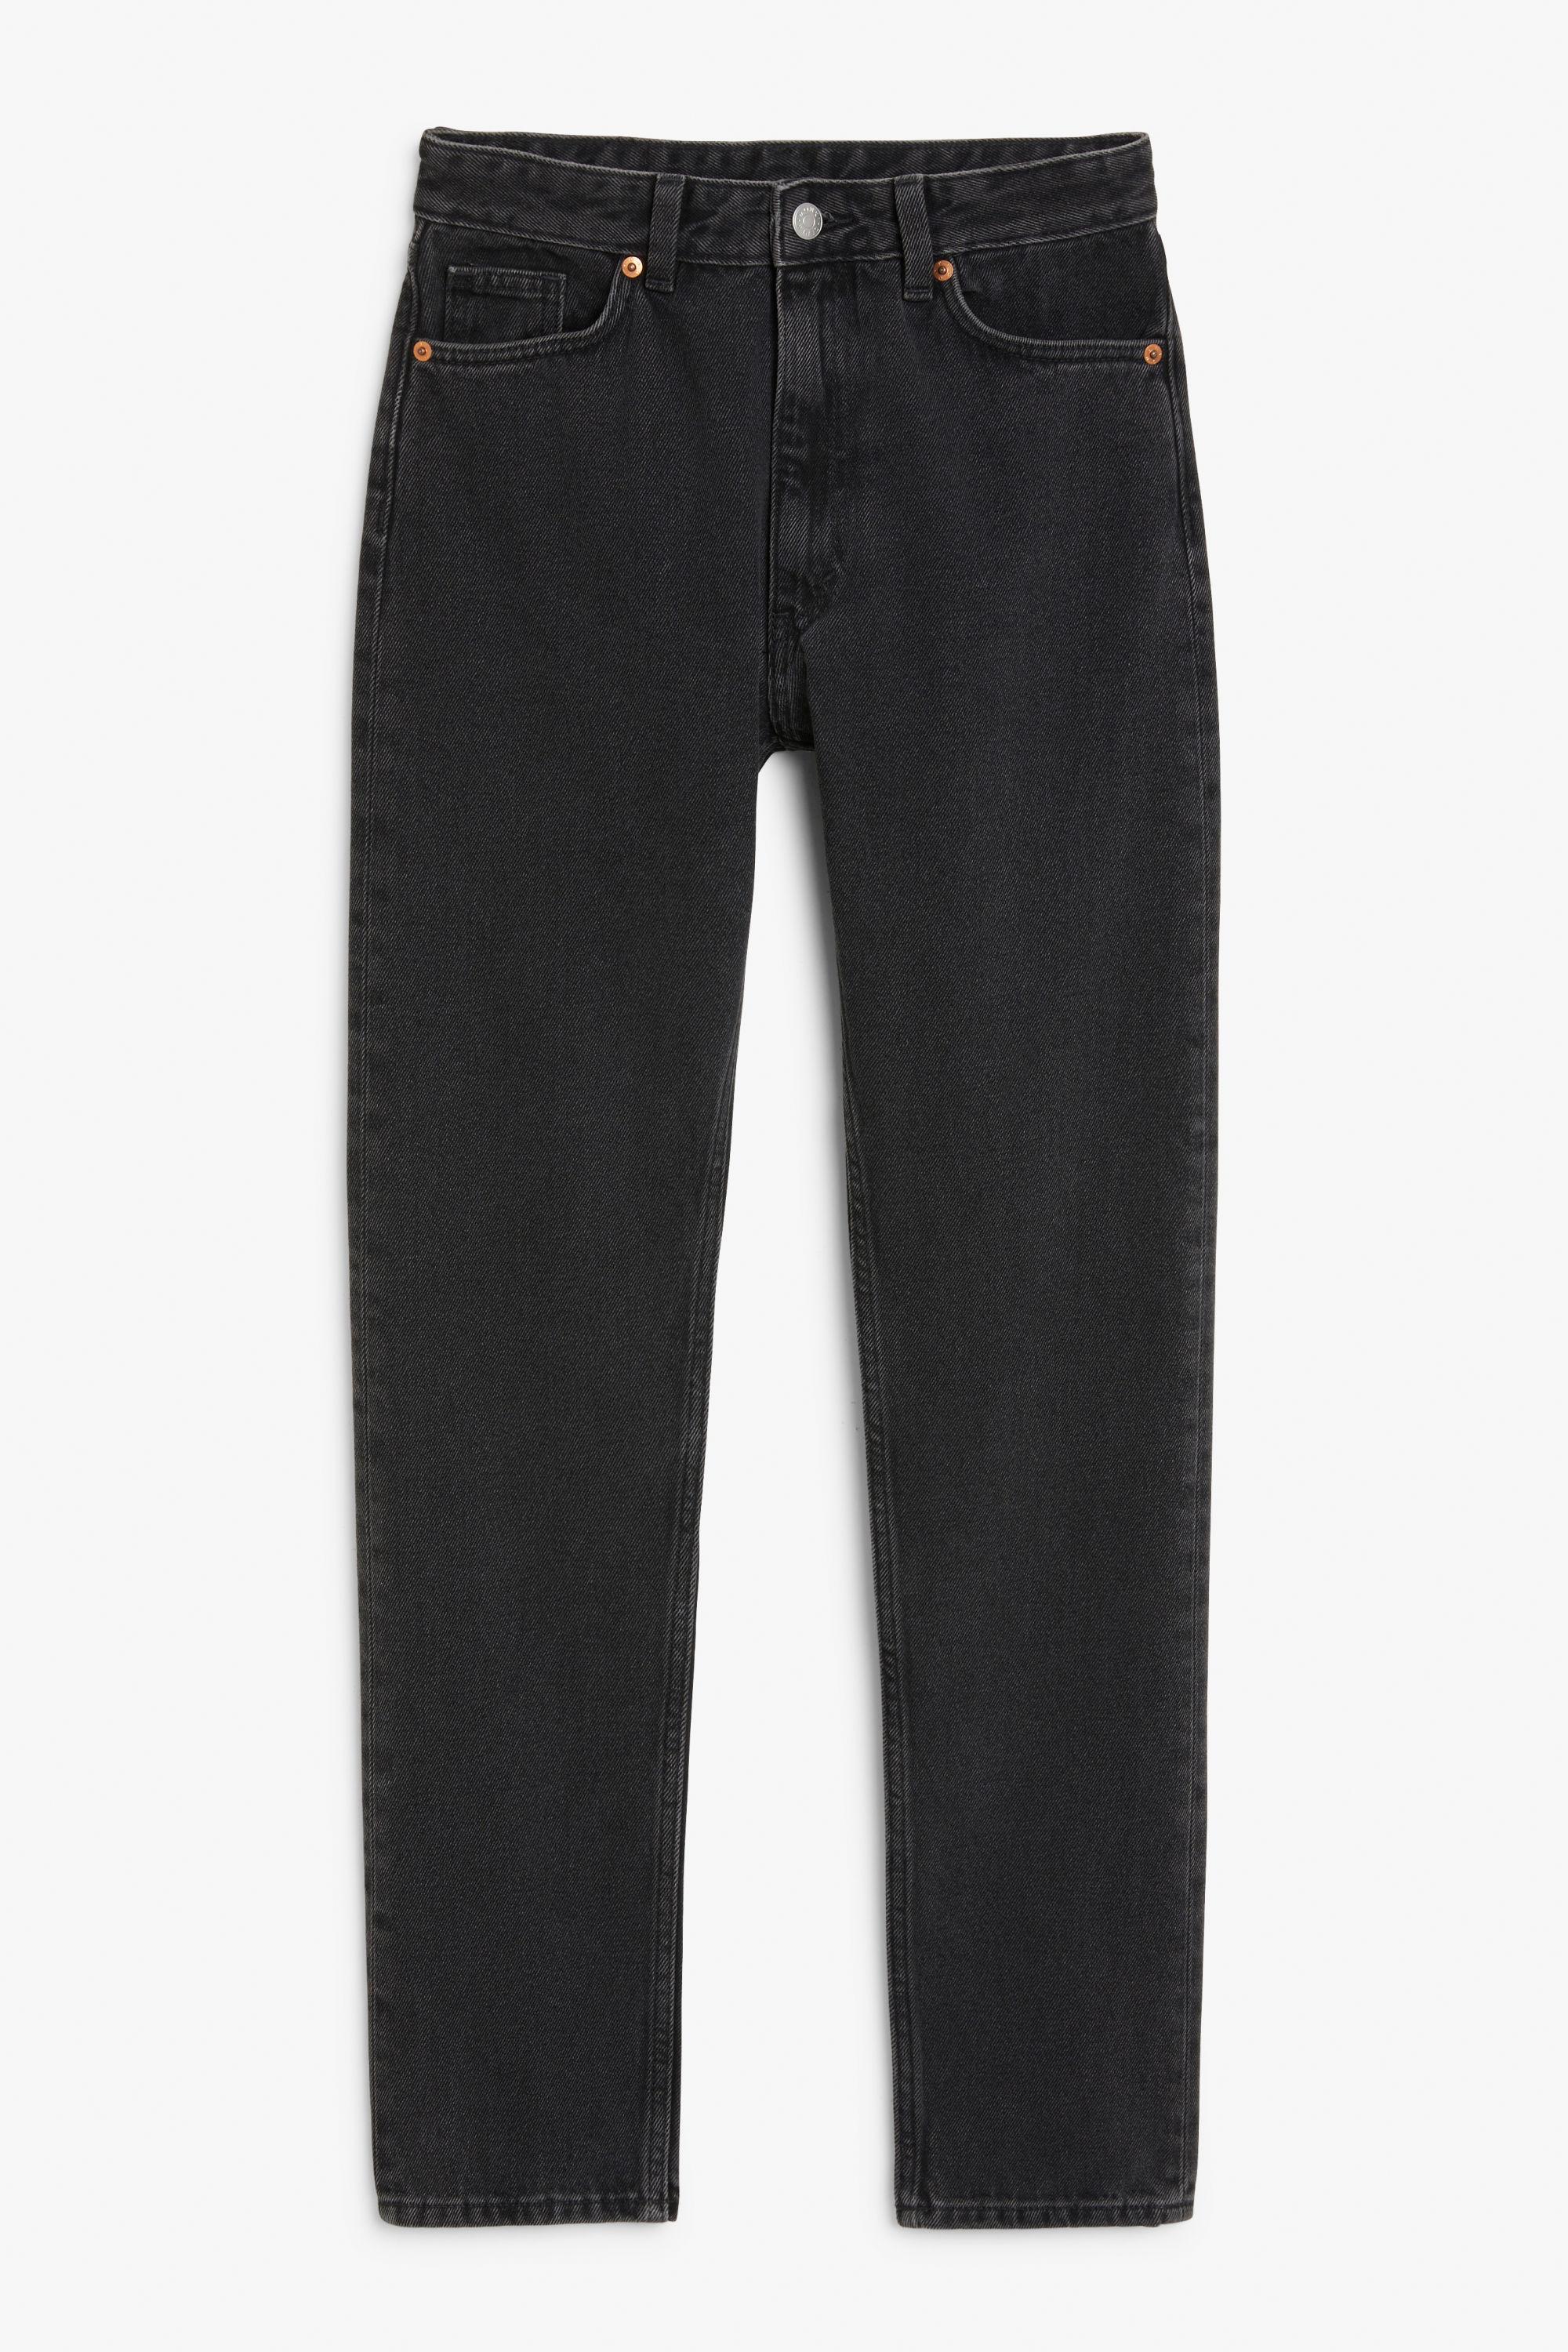 Monki Kimomo Tall High Waist Slim Black Jeans | Lyst Canada